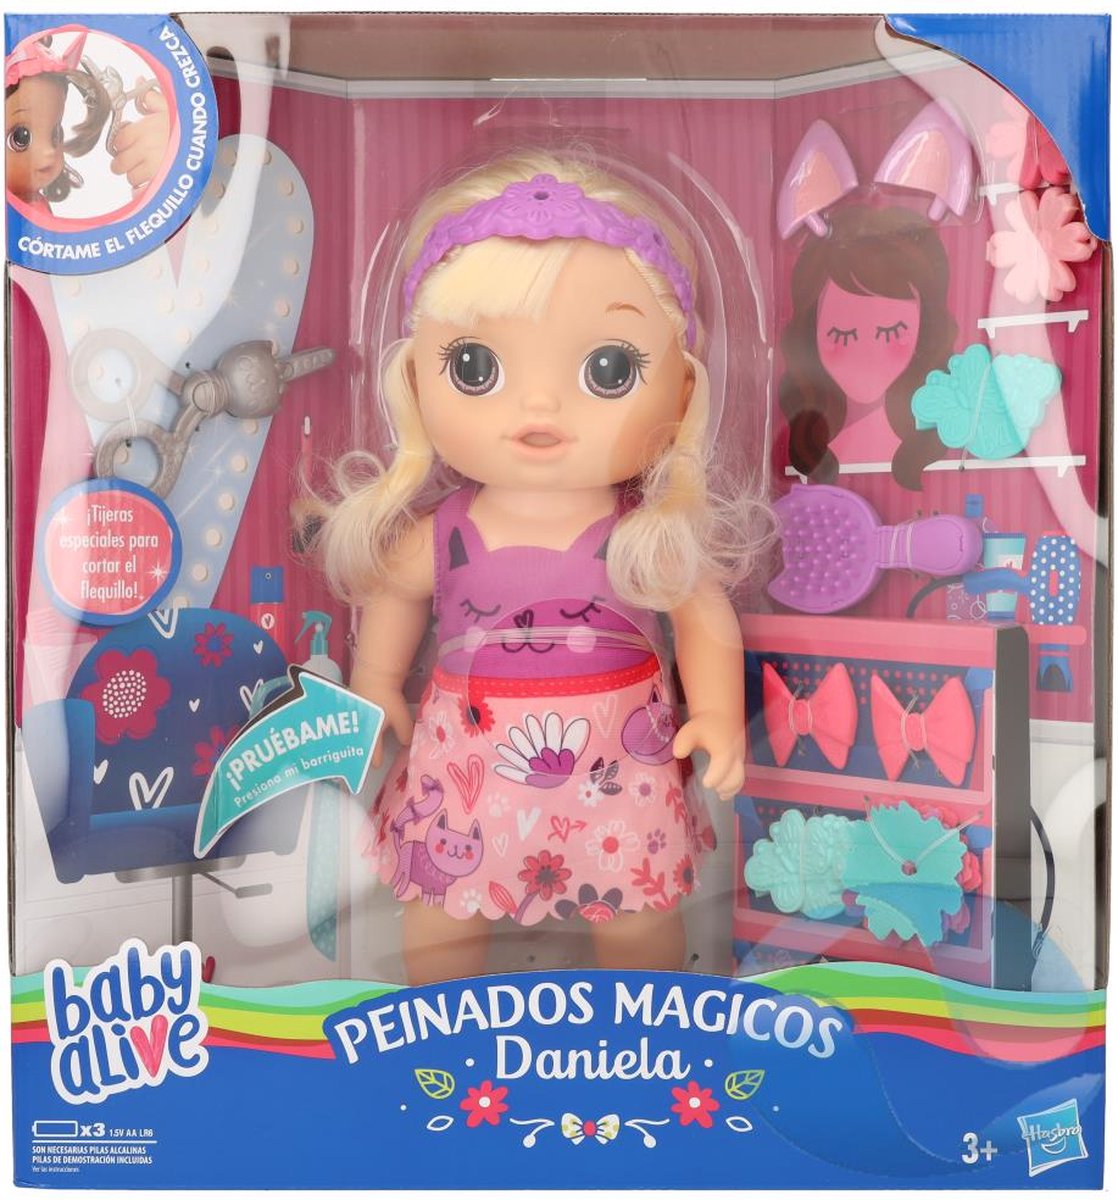 Hasbro Baby Alive Snipn Style Baby Doll Girl